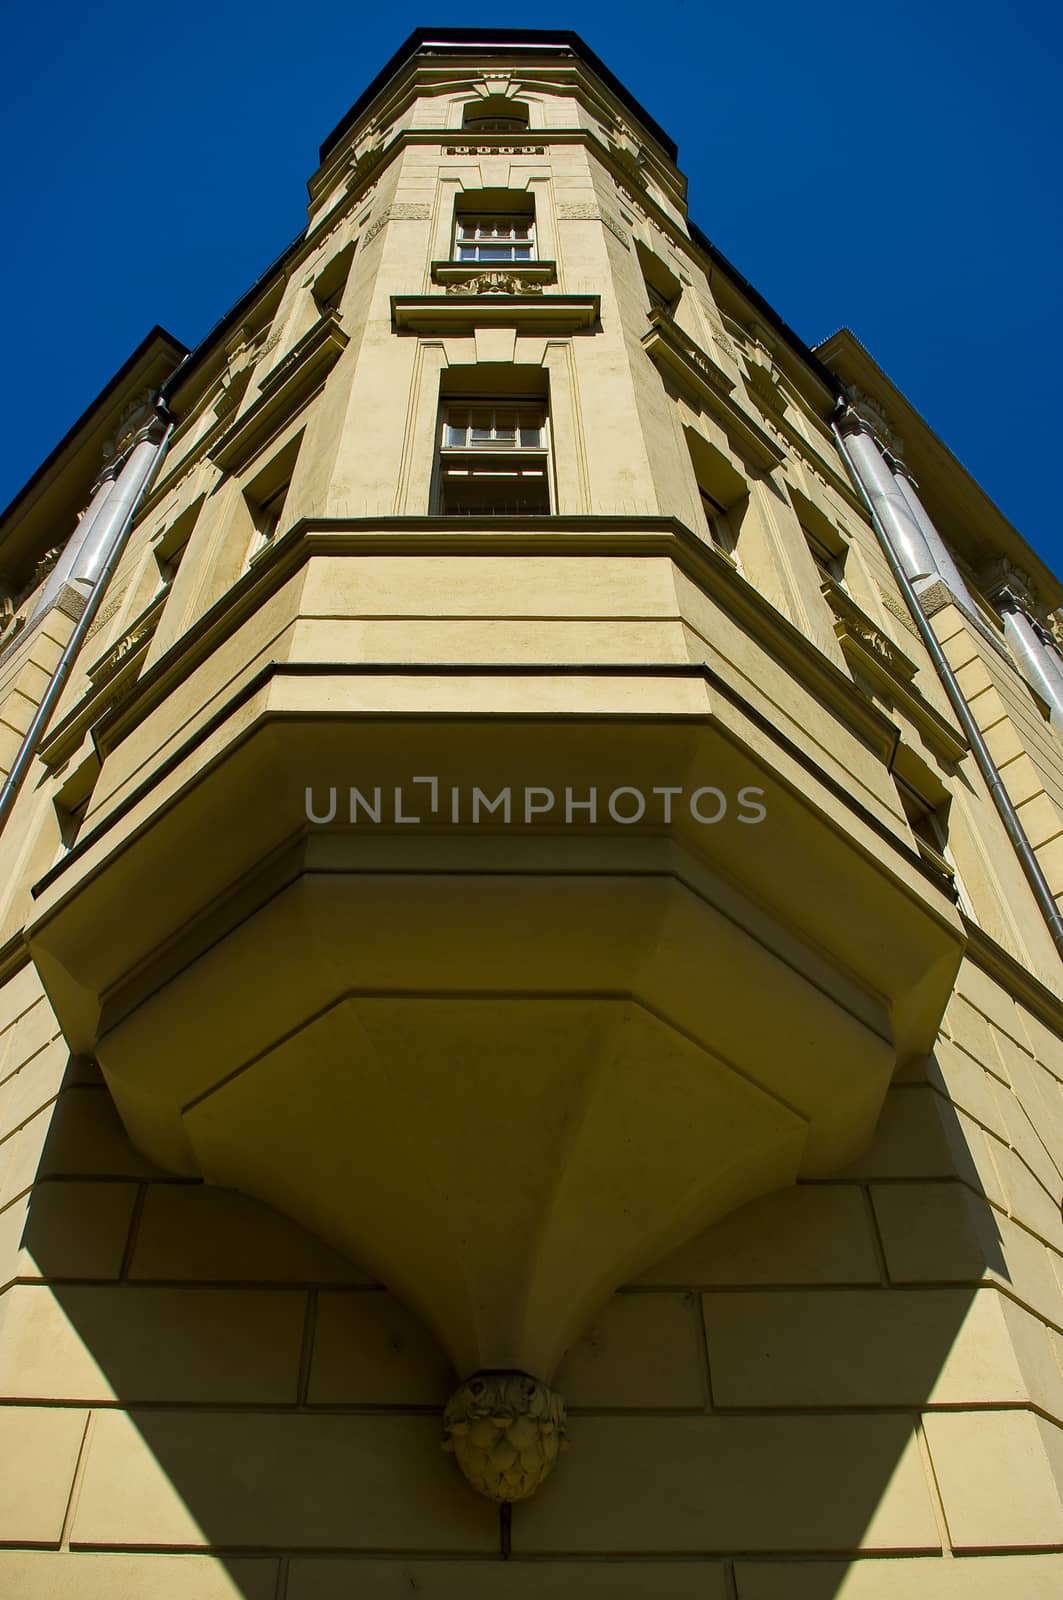 The corner of a historic building in Brno.